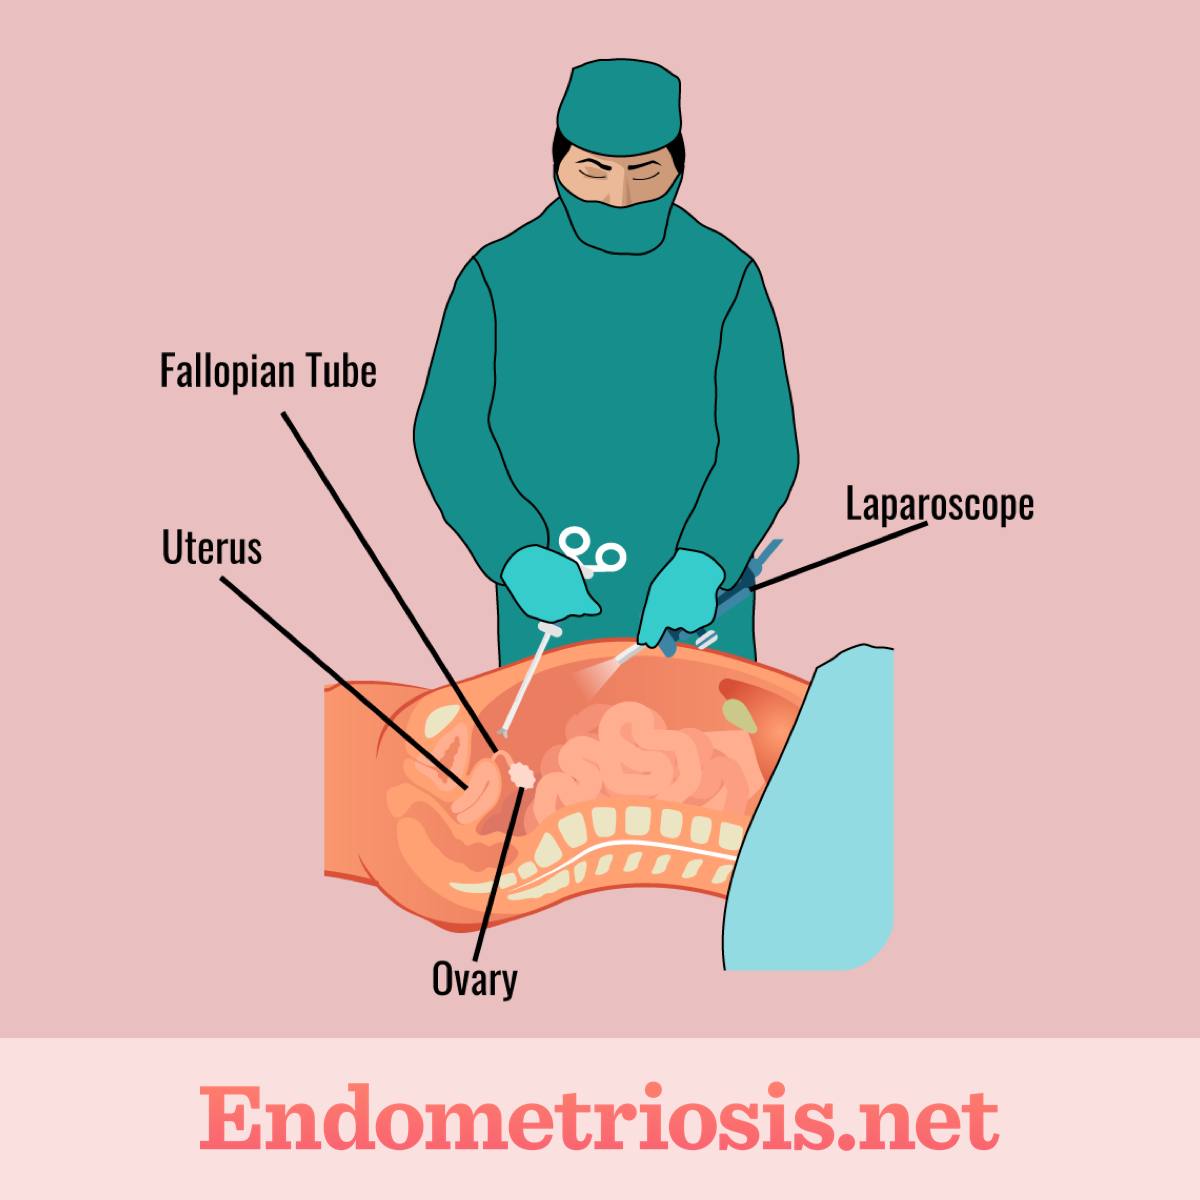 Laparoscopy inserted by surgeon through incision in abdomen to remove endometriosis lesions